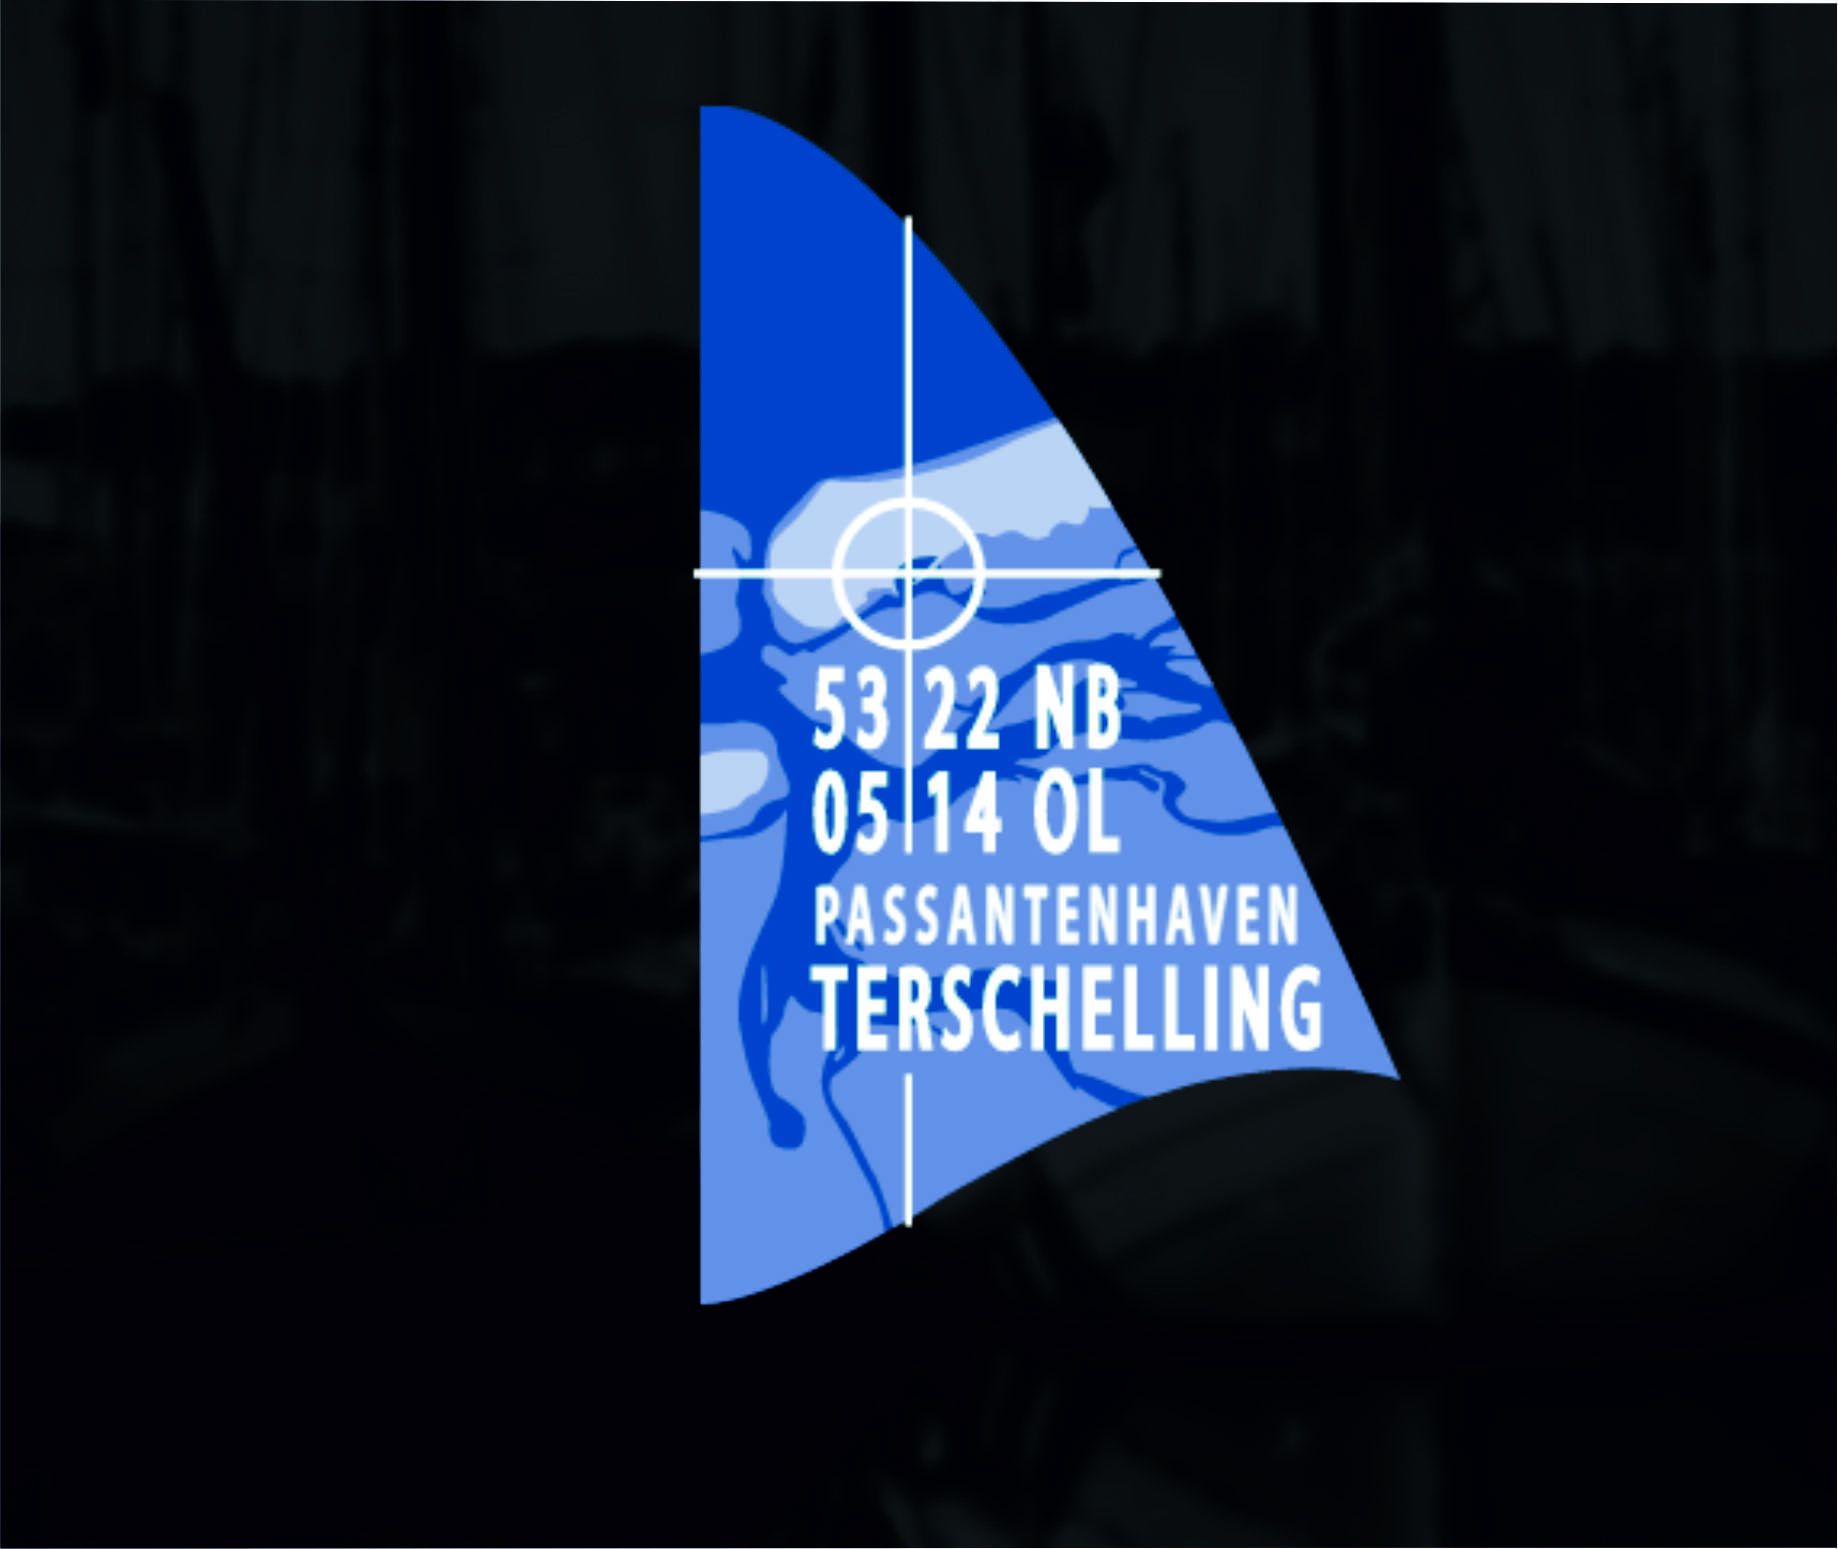 Stichting Passantenhaven Terschelling